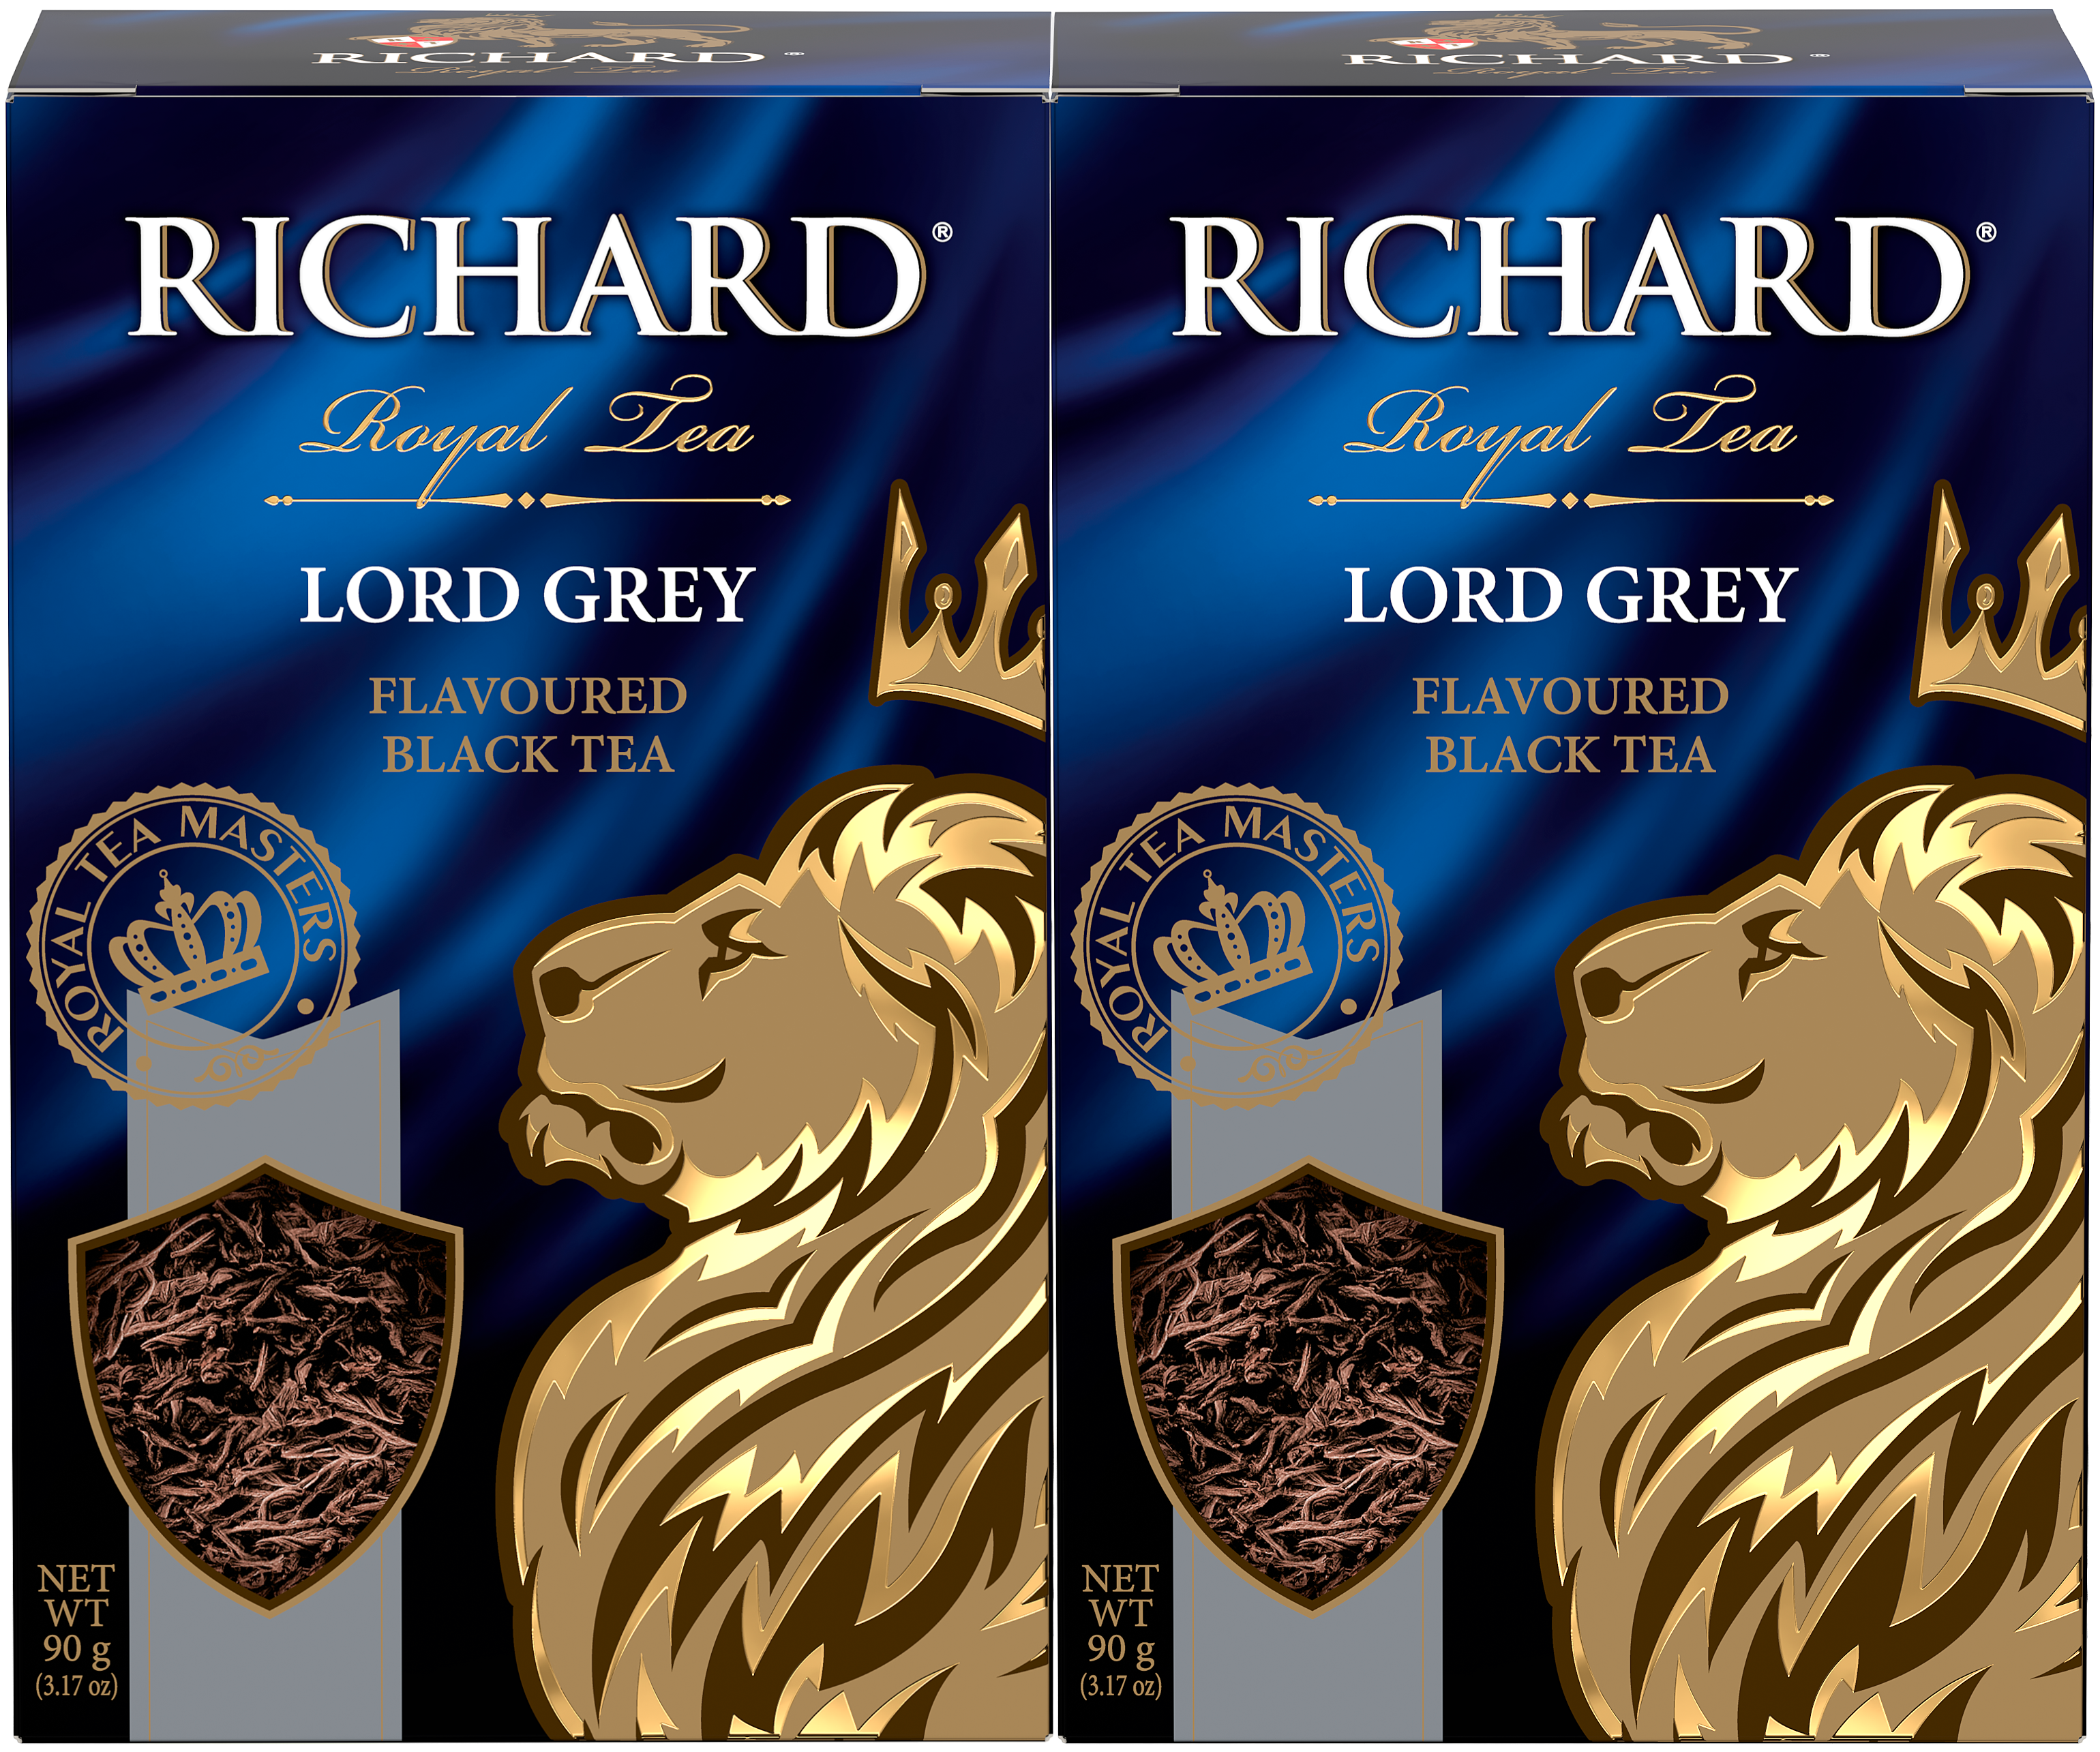 RICHARD Lord Grey - Crni cejlonski čaj krupnog lista sa bergamotom i limunom, 90g rinfuz